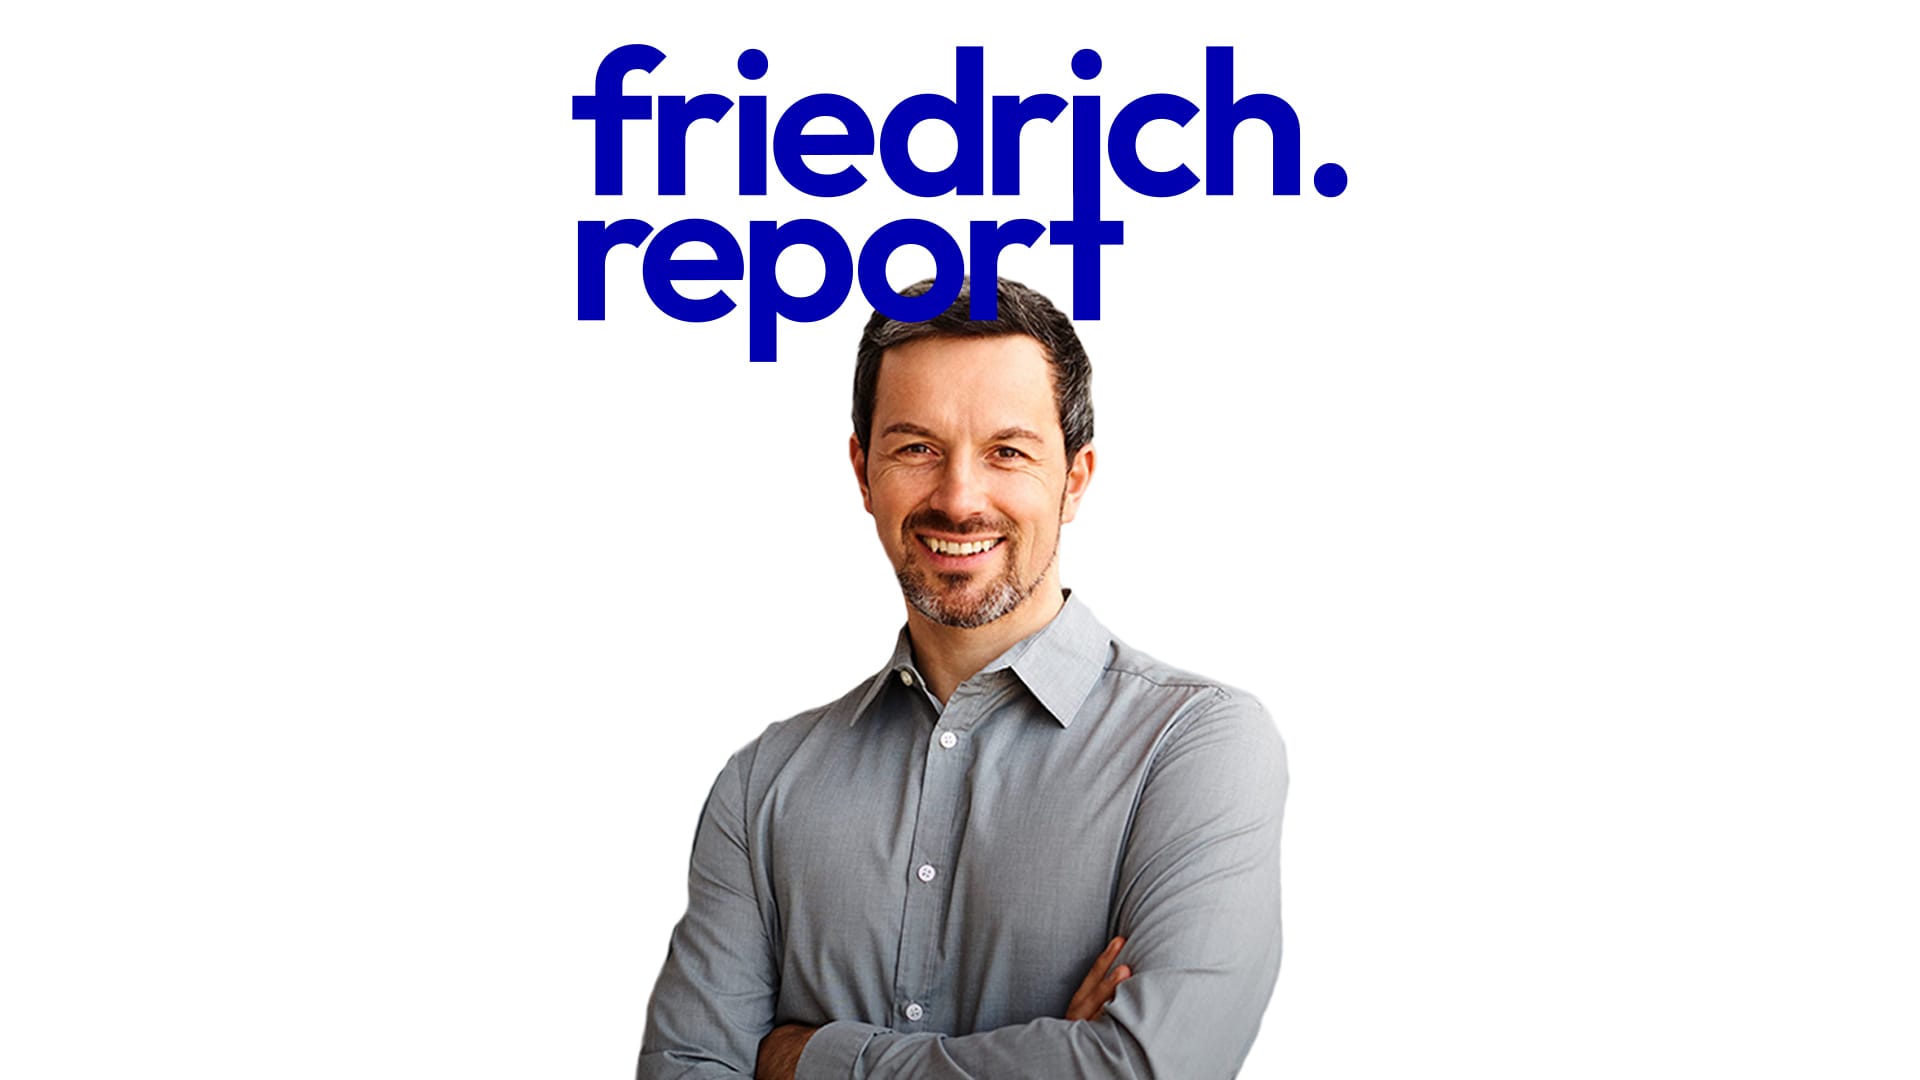 (c) Friedrich.report